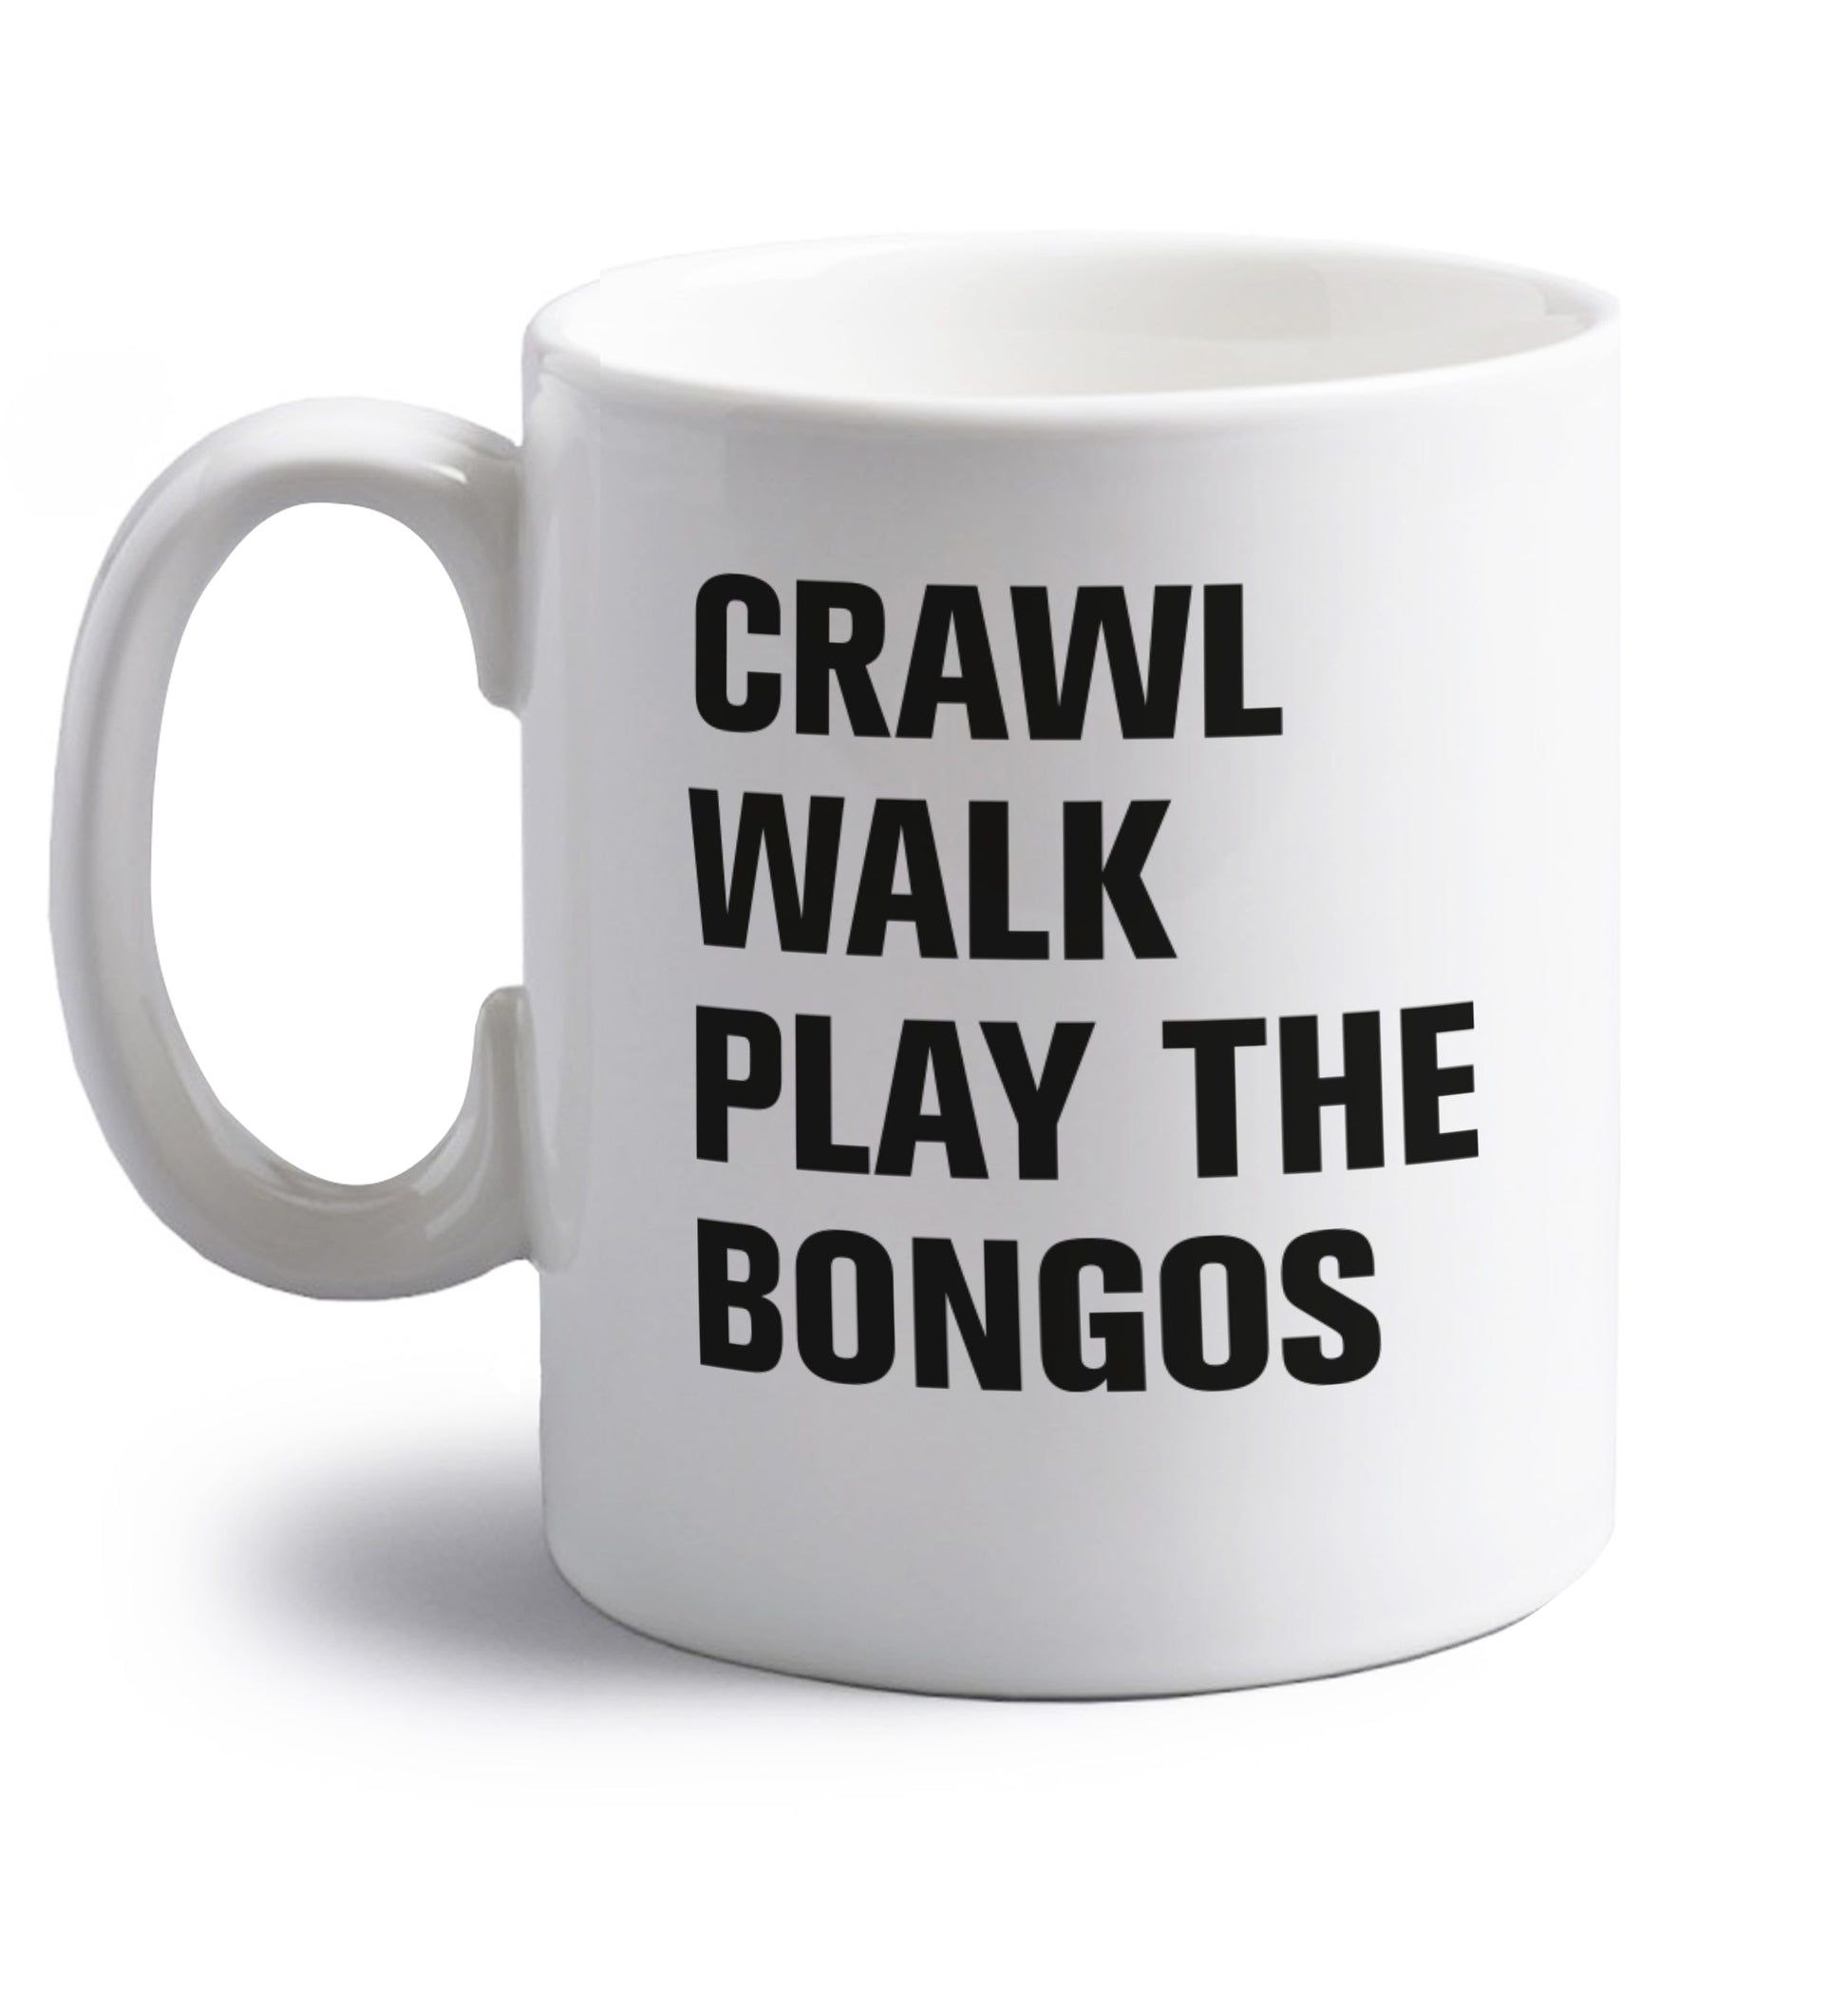 Crawl Walk Play Bongos right handed white ceramic mug 